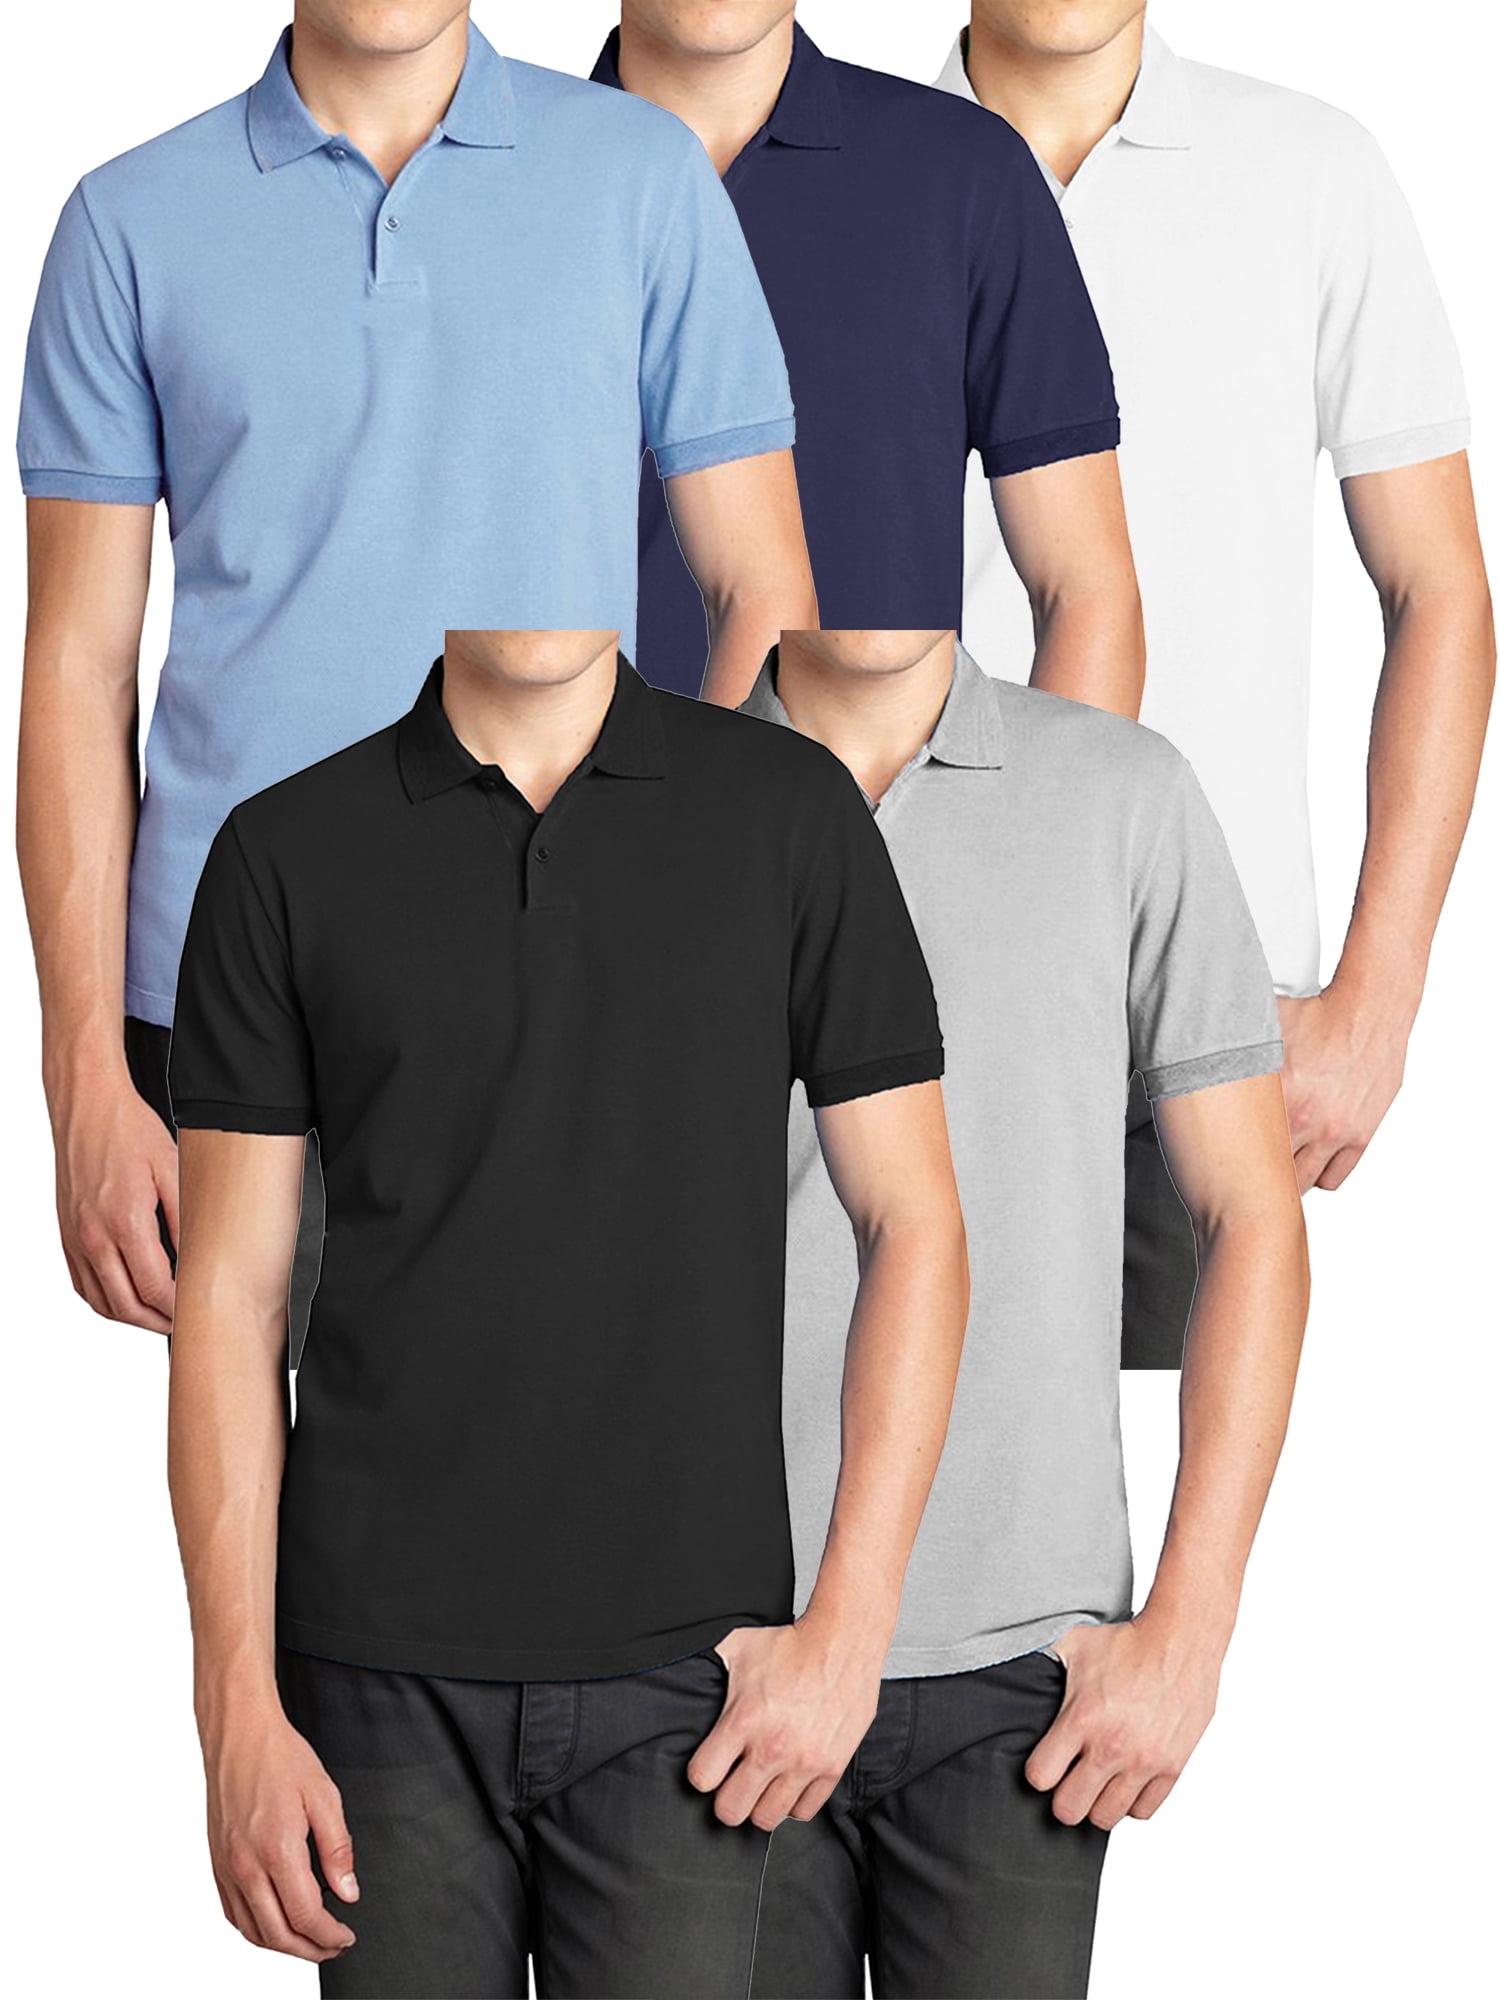 5-Pack Men's Comfort Pique Polo Shirt (S-5XL) - Walmart.com